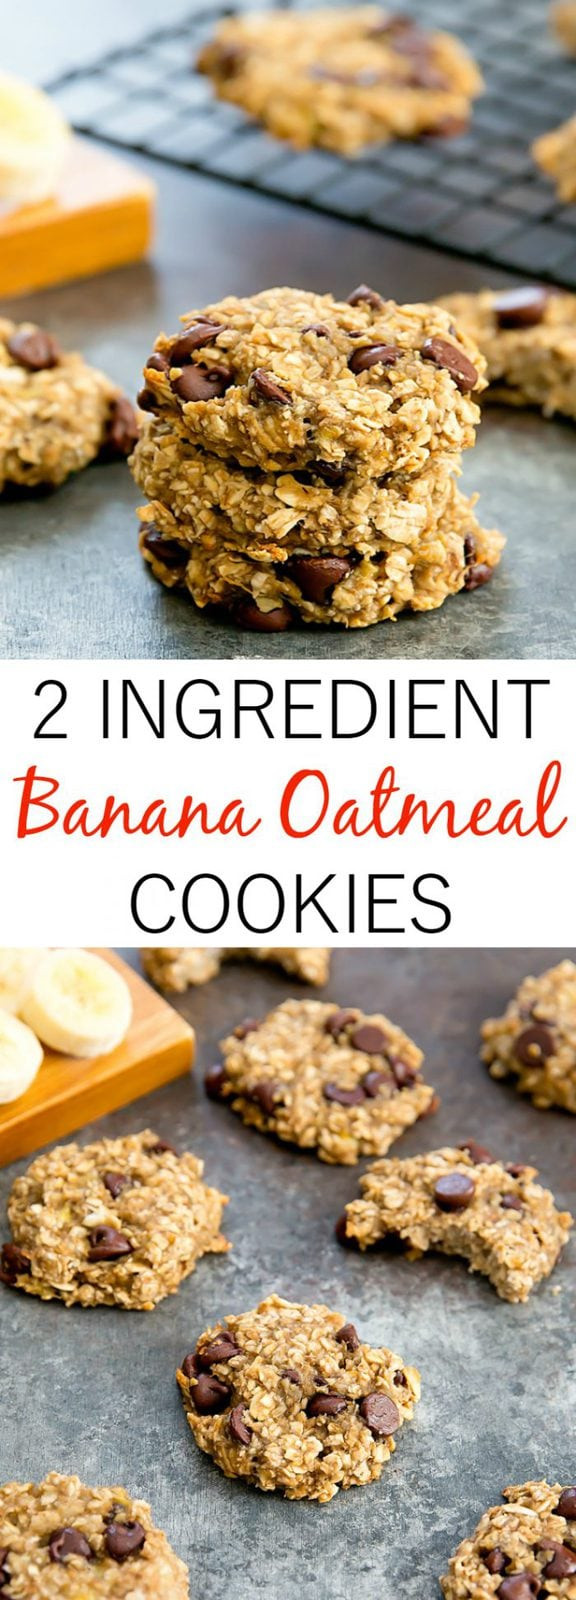 Oatmeal Cookies For Two
 2 Ingre nt Banana Oatmeal Cookies Kirbie s Cravings